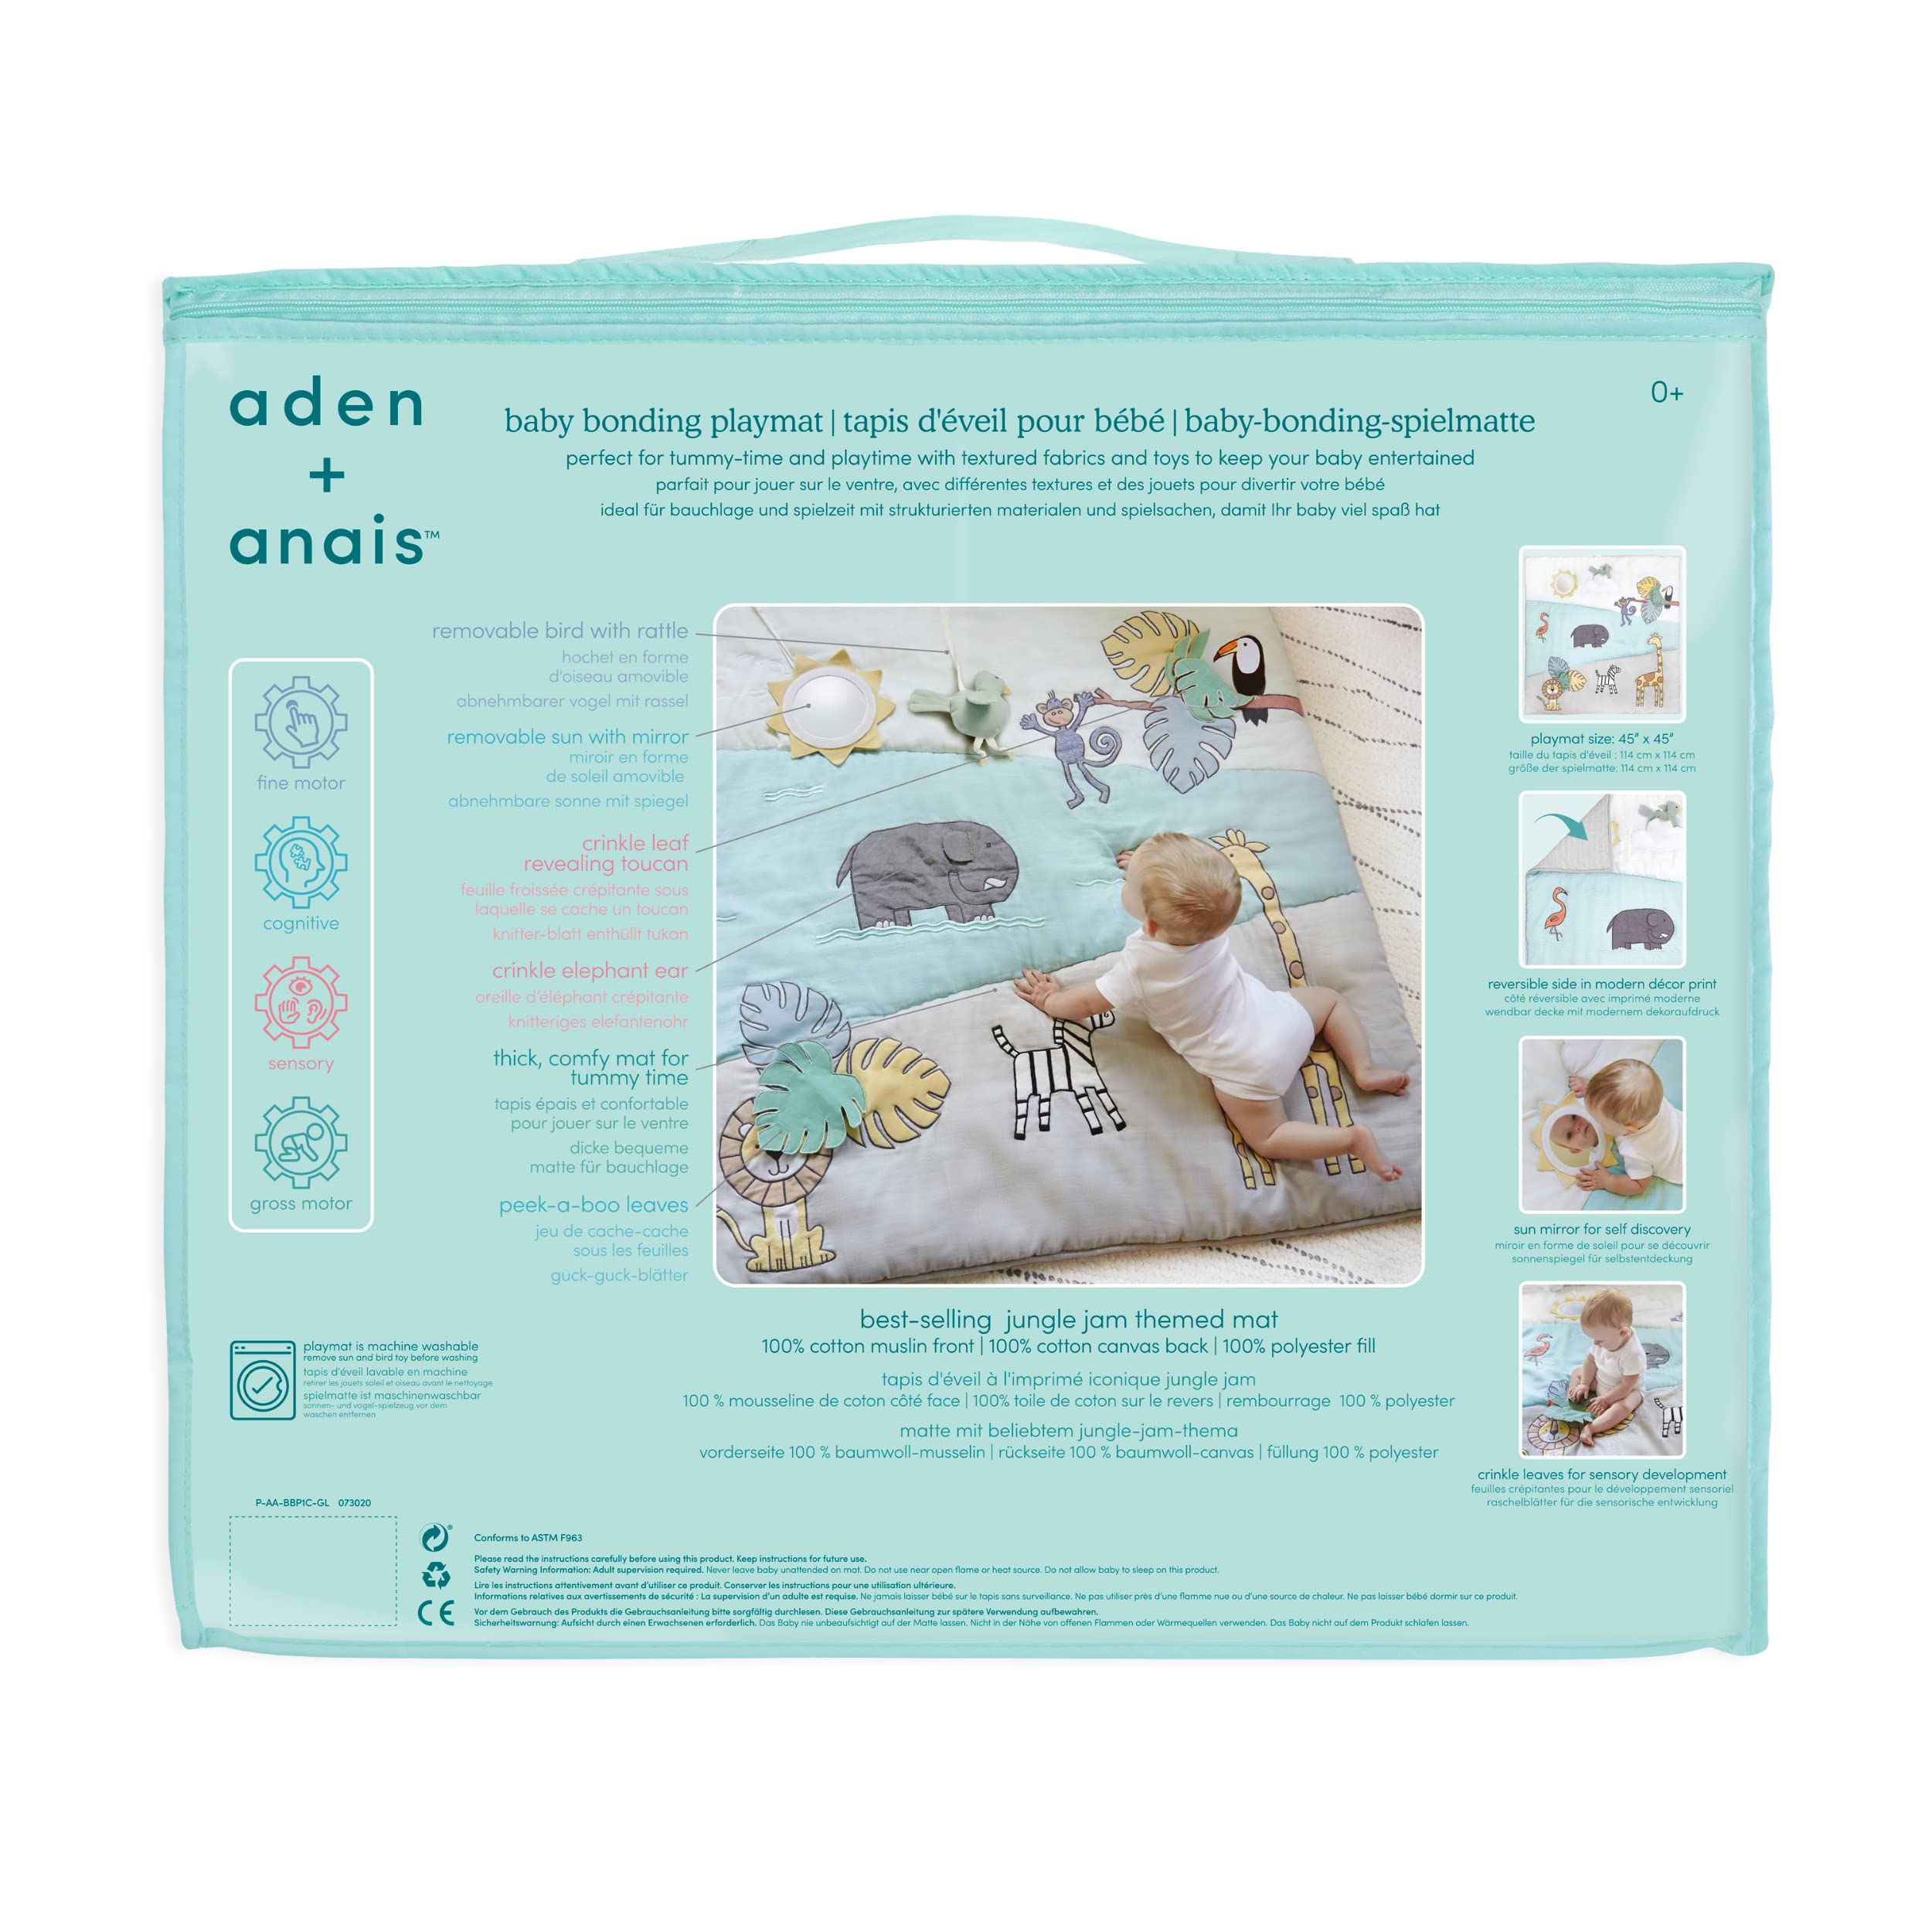 aden + anais Baby Bonding Playmat – Reversible 45” x 45” Cotton Muslin Infant Mat – Foldable Play & Tummy Time Cushion – Sensory Development Toys – Machine Washable - Non Toxic, PVC Free